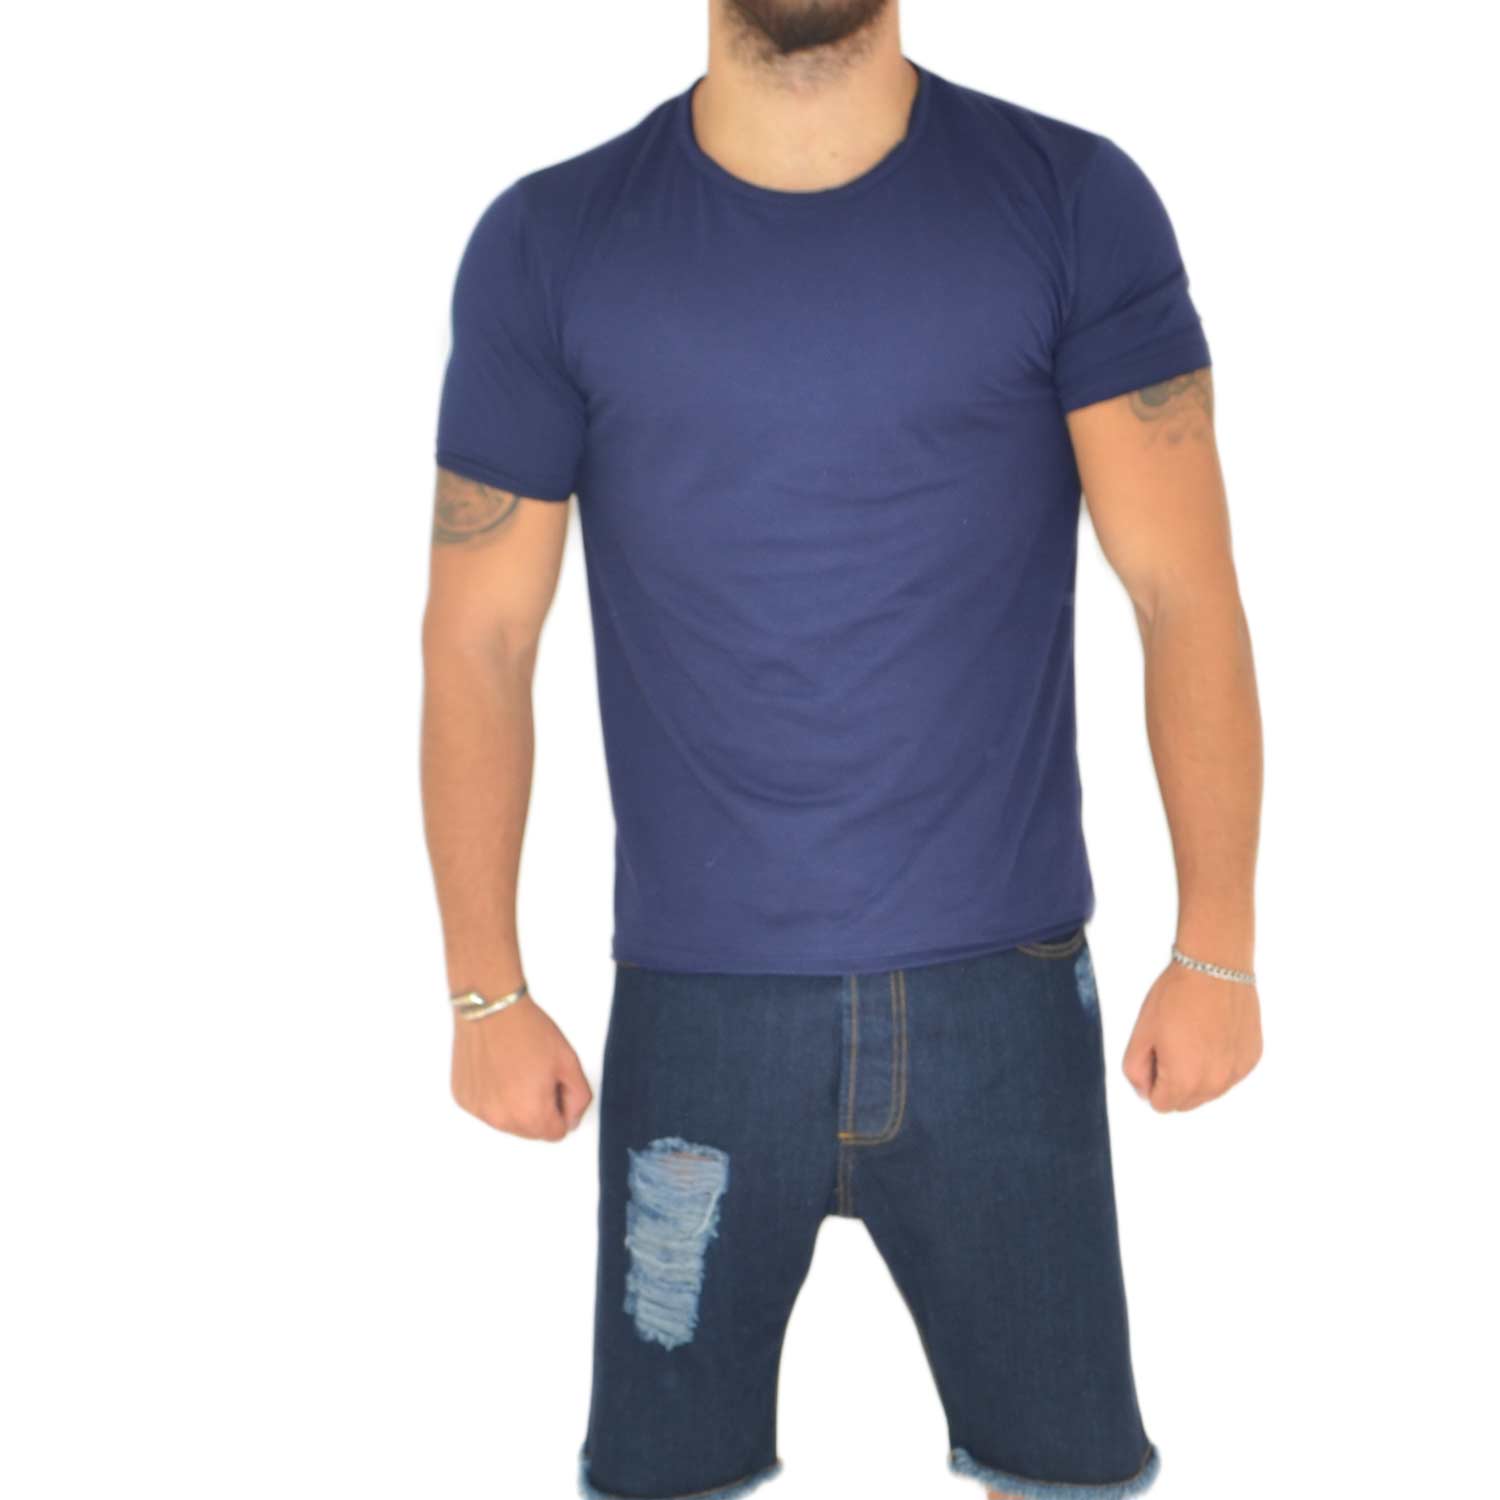 T- shirt basic uomo in cotone elastico blu avion slim fit girocollo con cucitura in tinta made in italy